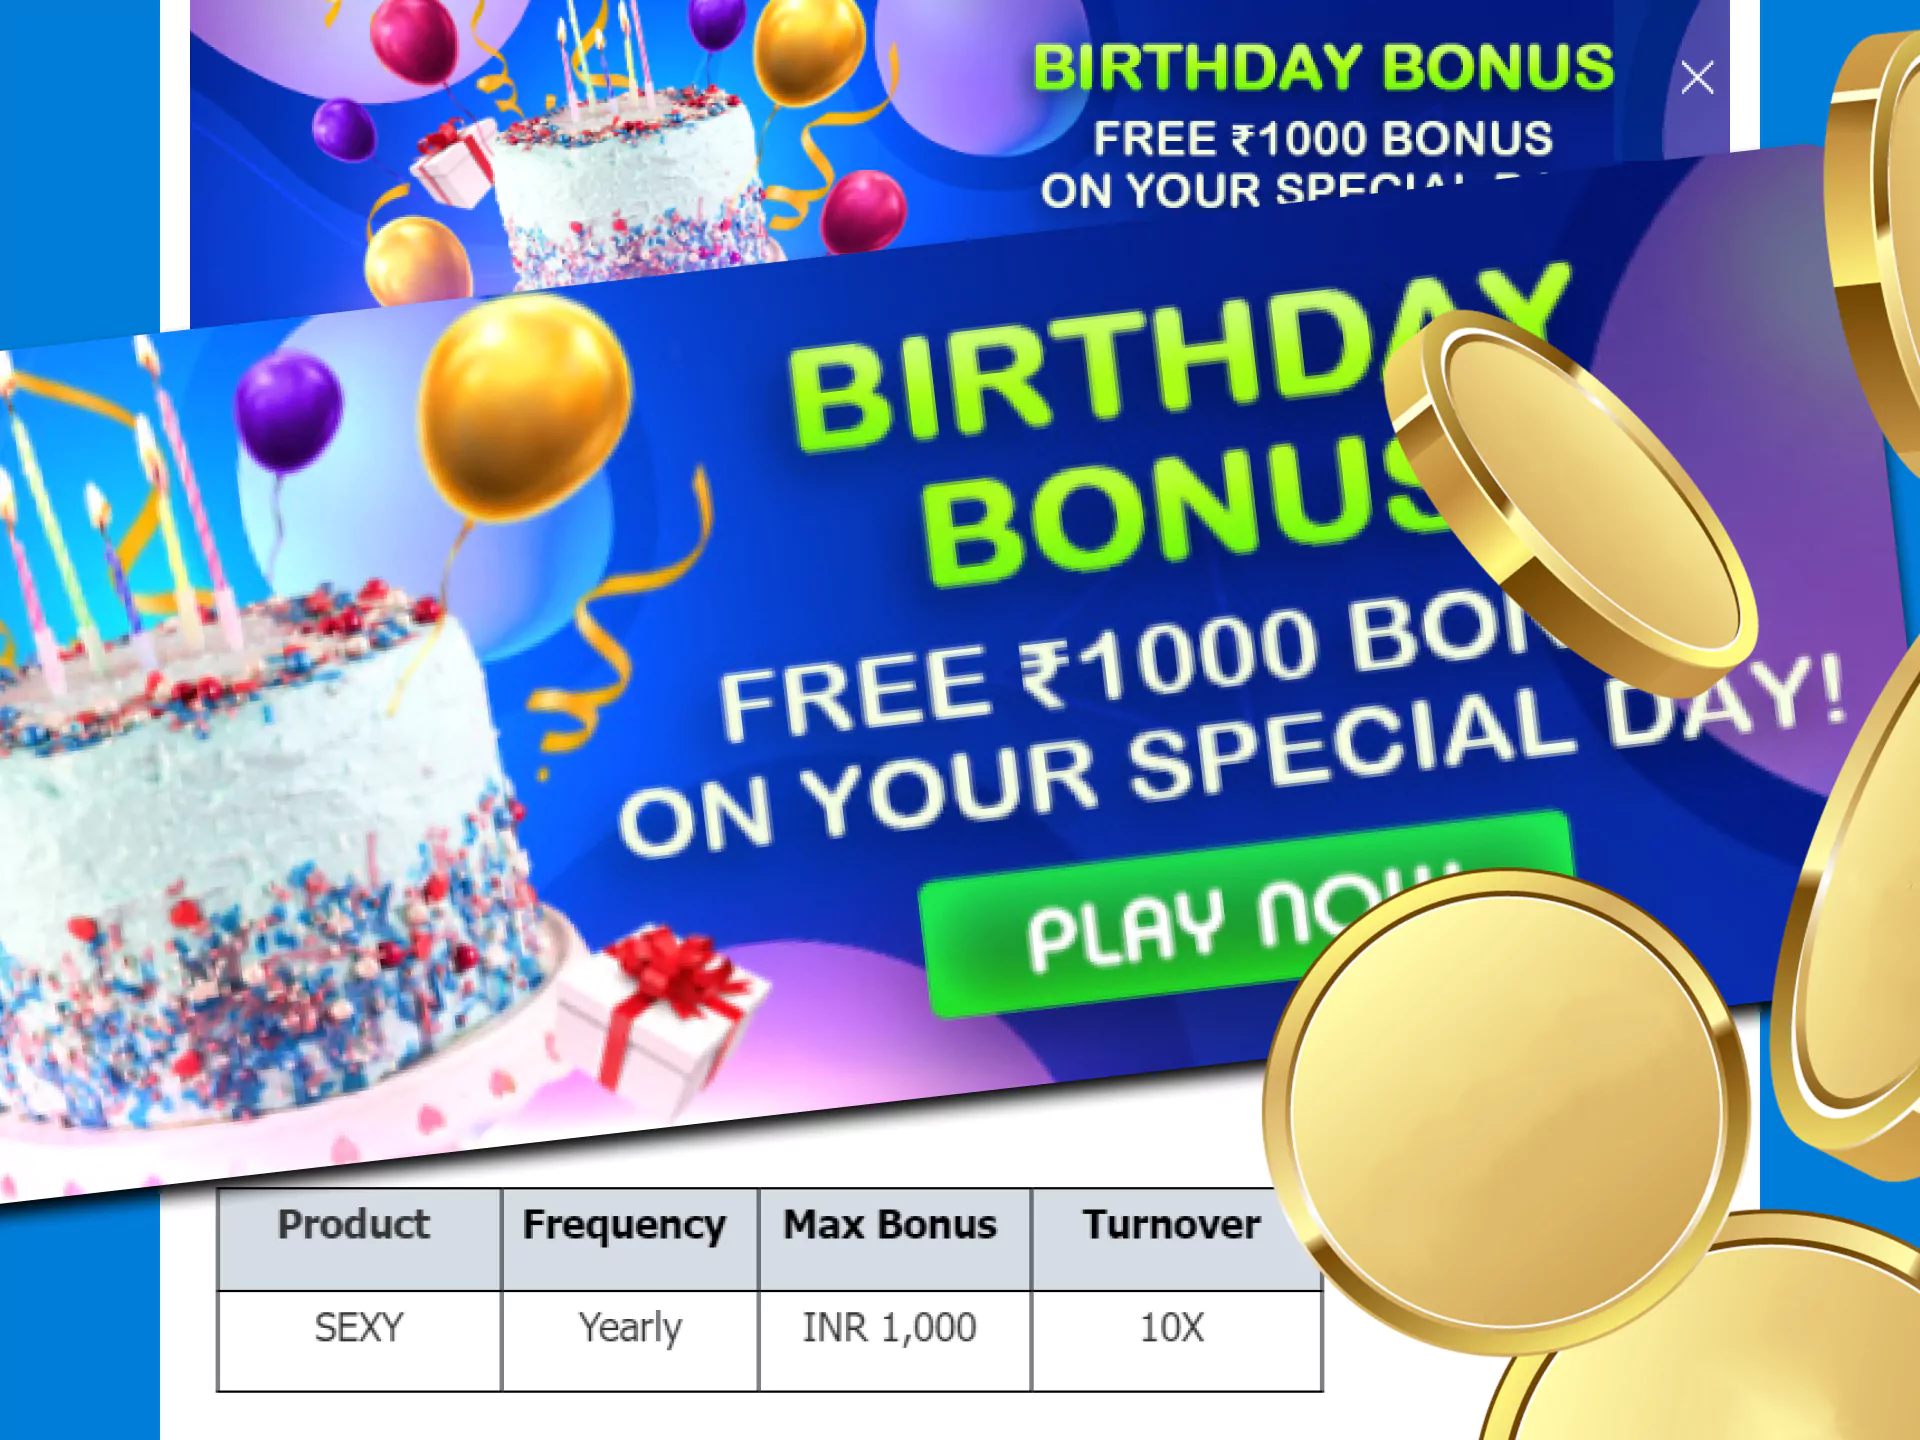 Get a birthday bonus from Crickex.